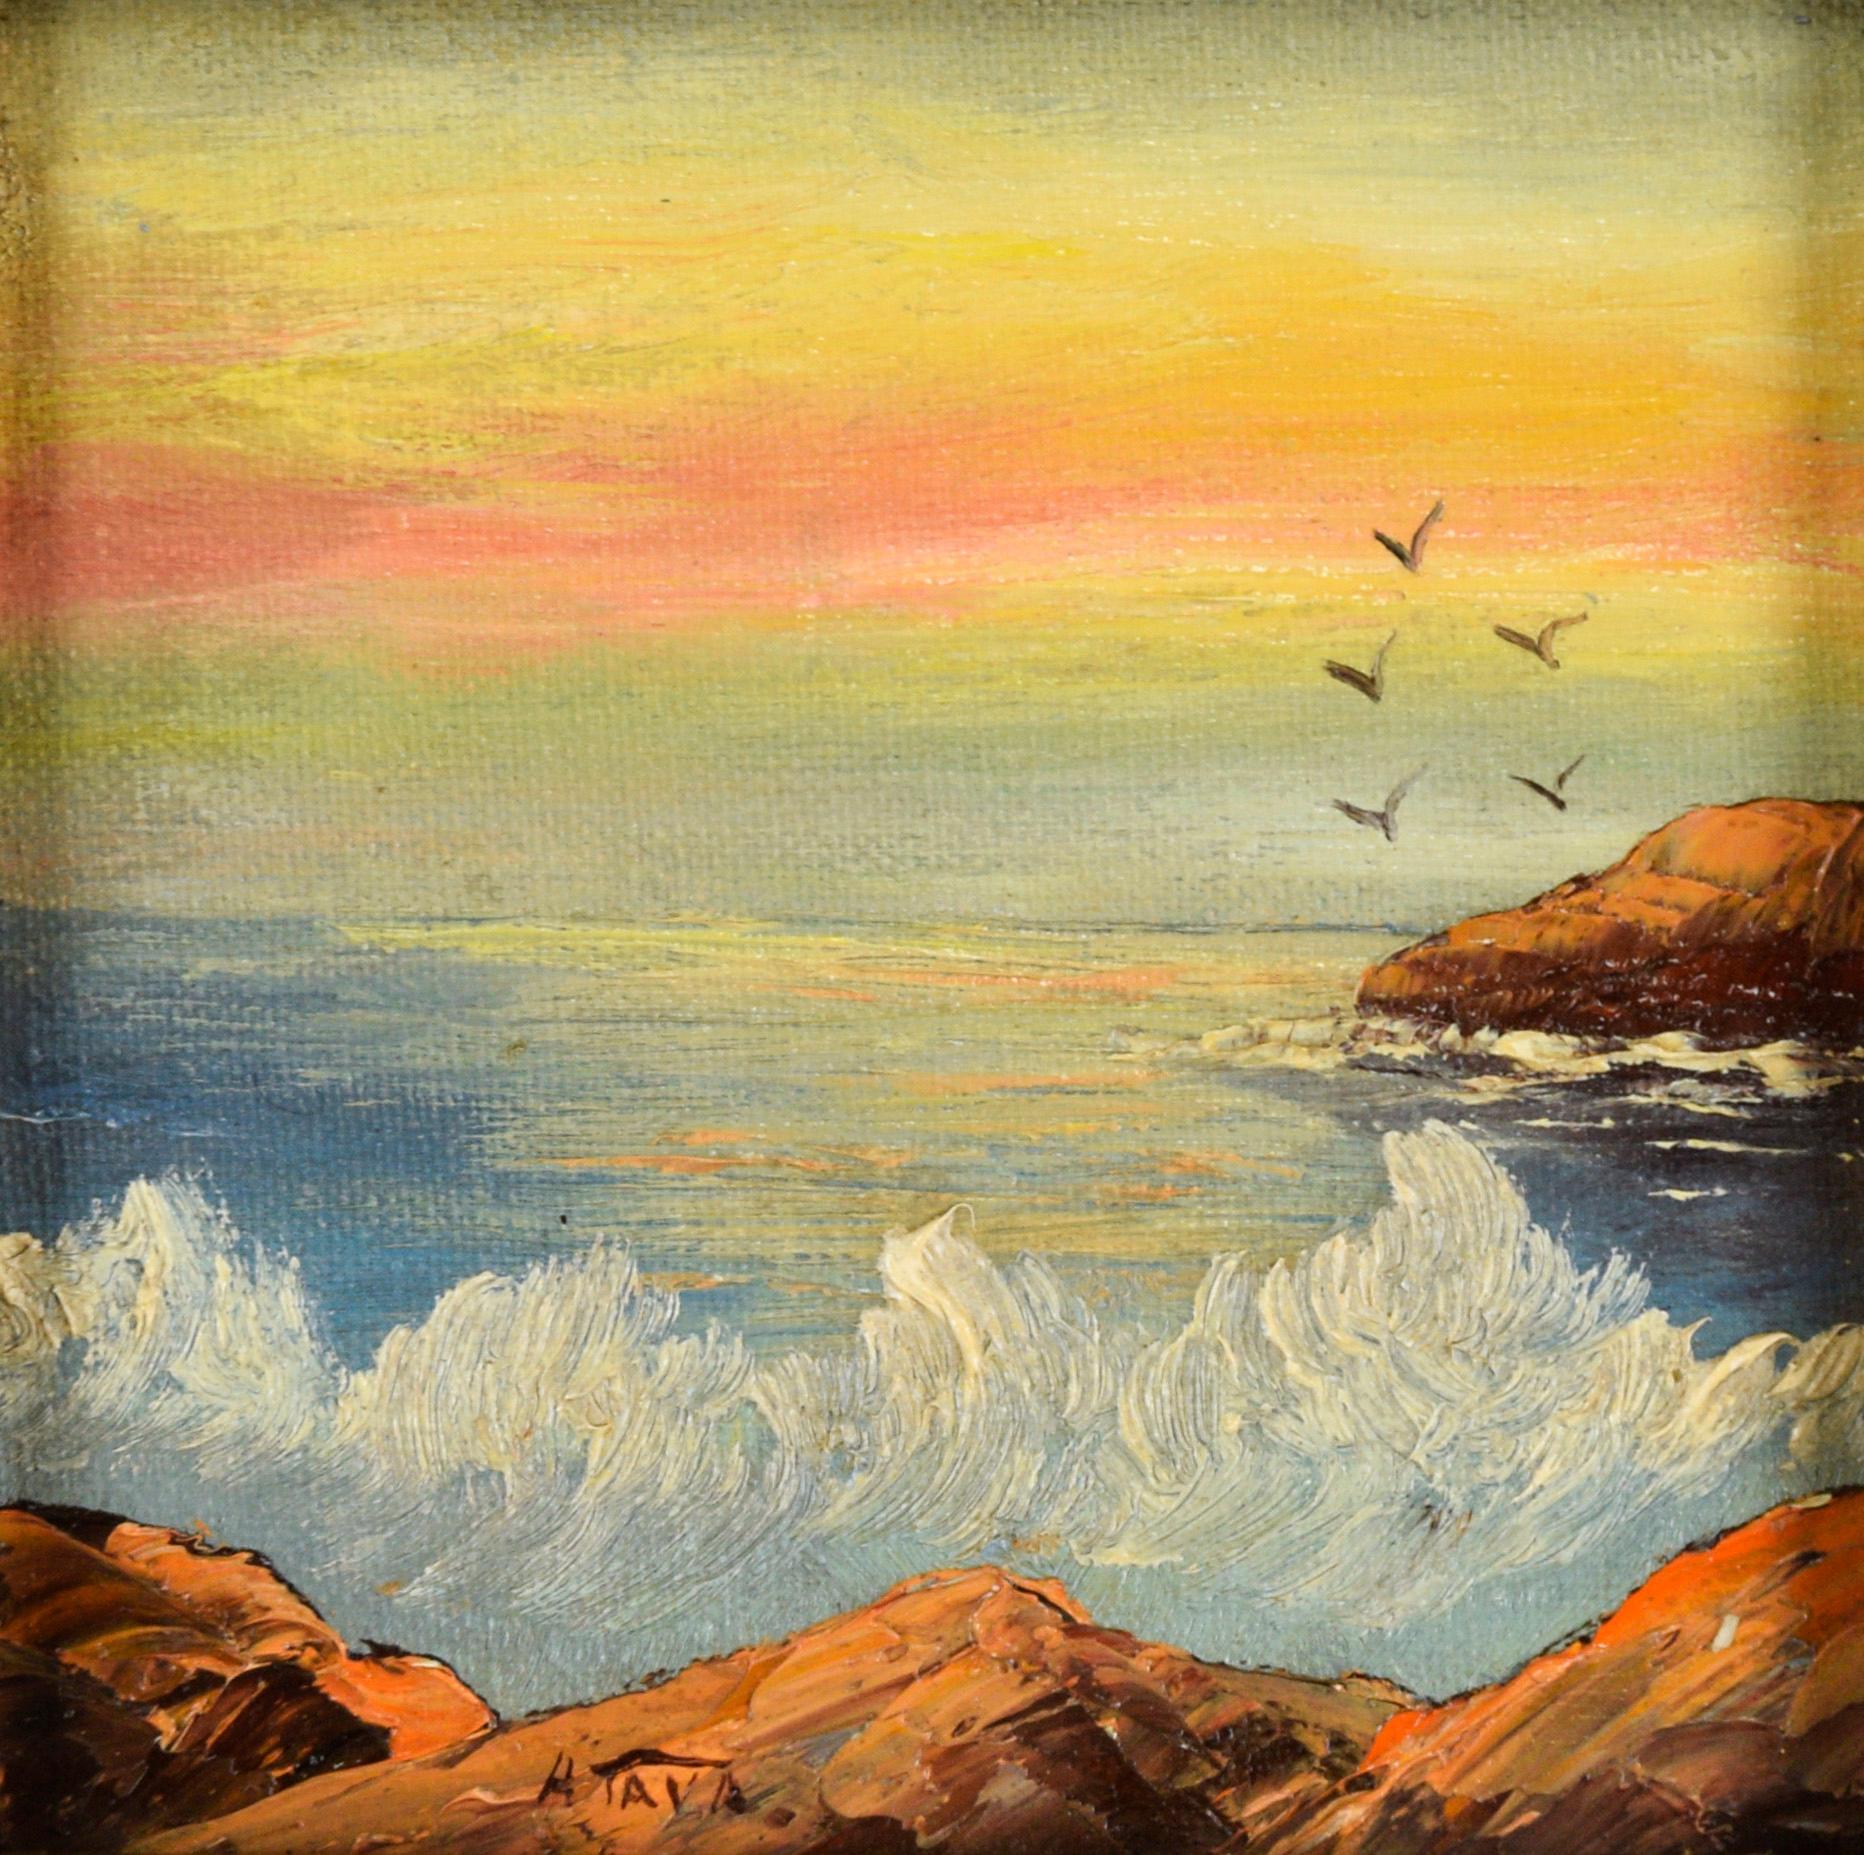 Ocean Splash at Sunset - Small Plein Air Oil Painting on Canvas

Ocean seascape by California artist 